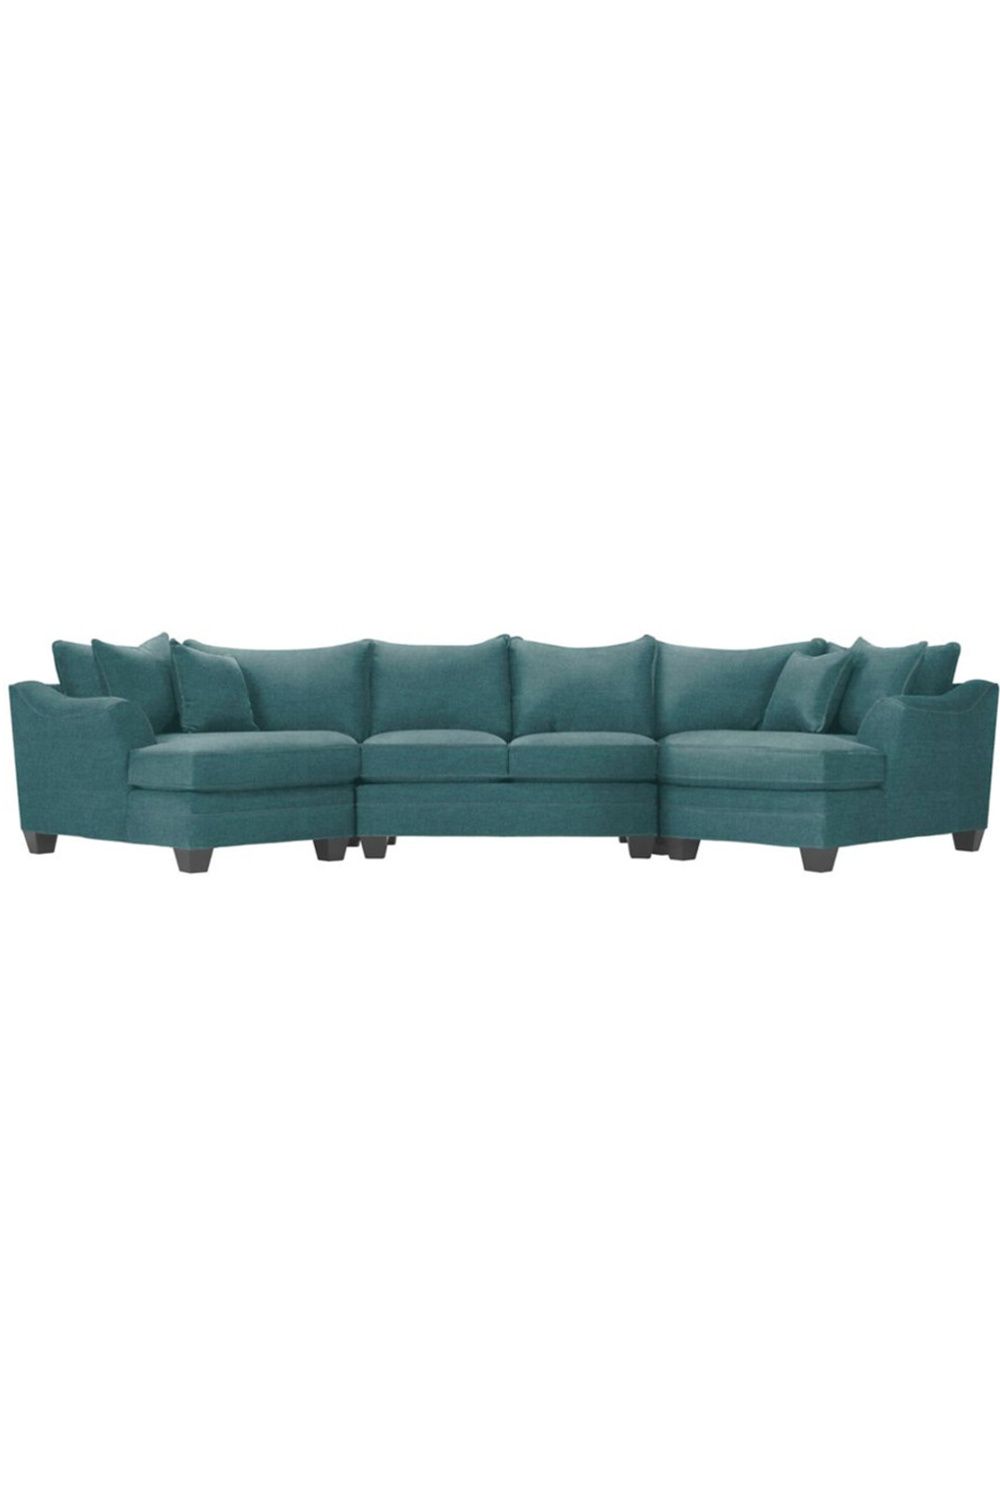 A microfiber sectional sofa is a
  beautiful sofa for living room decor